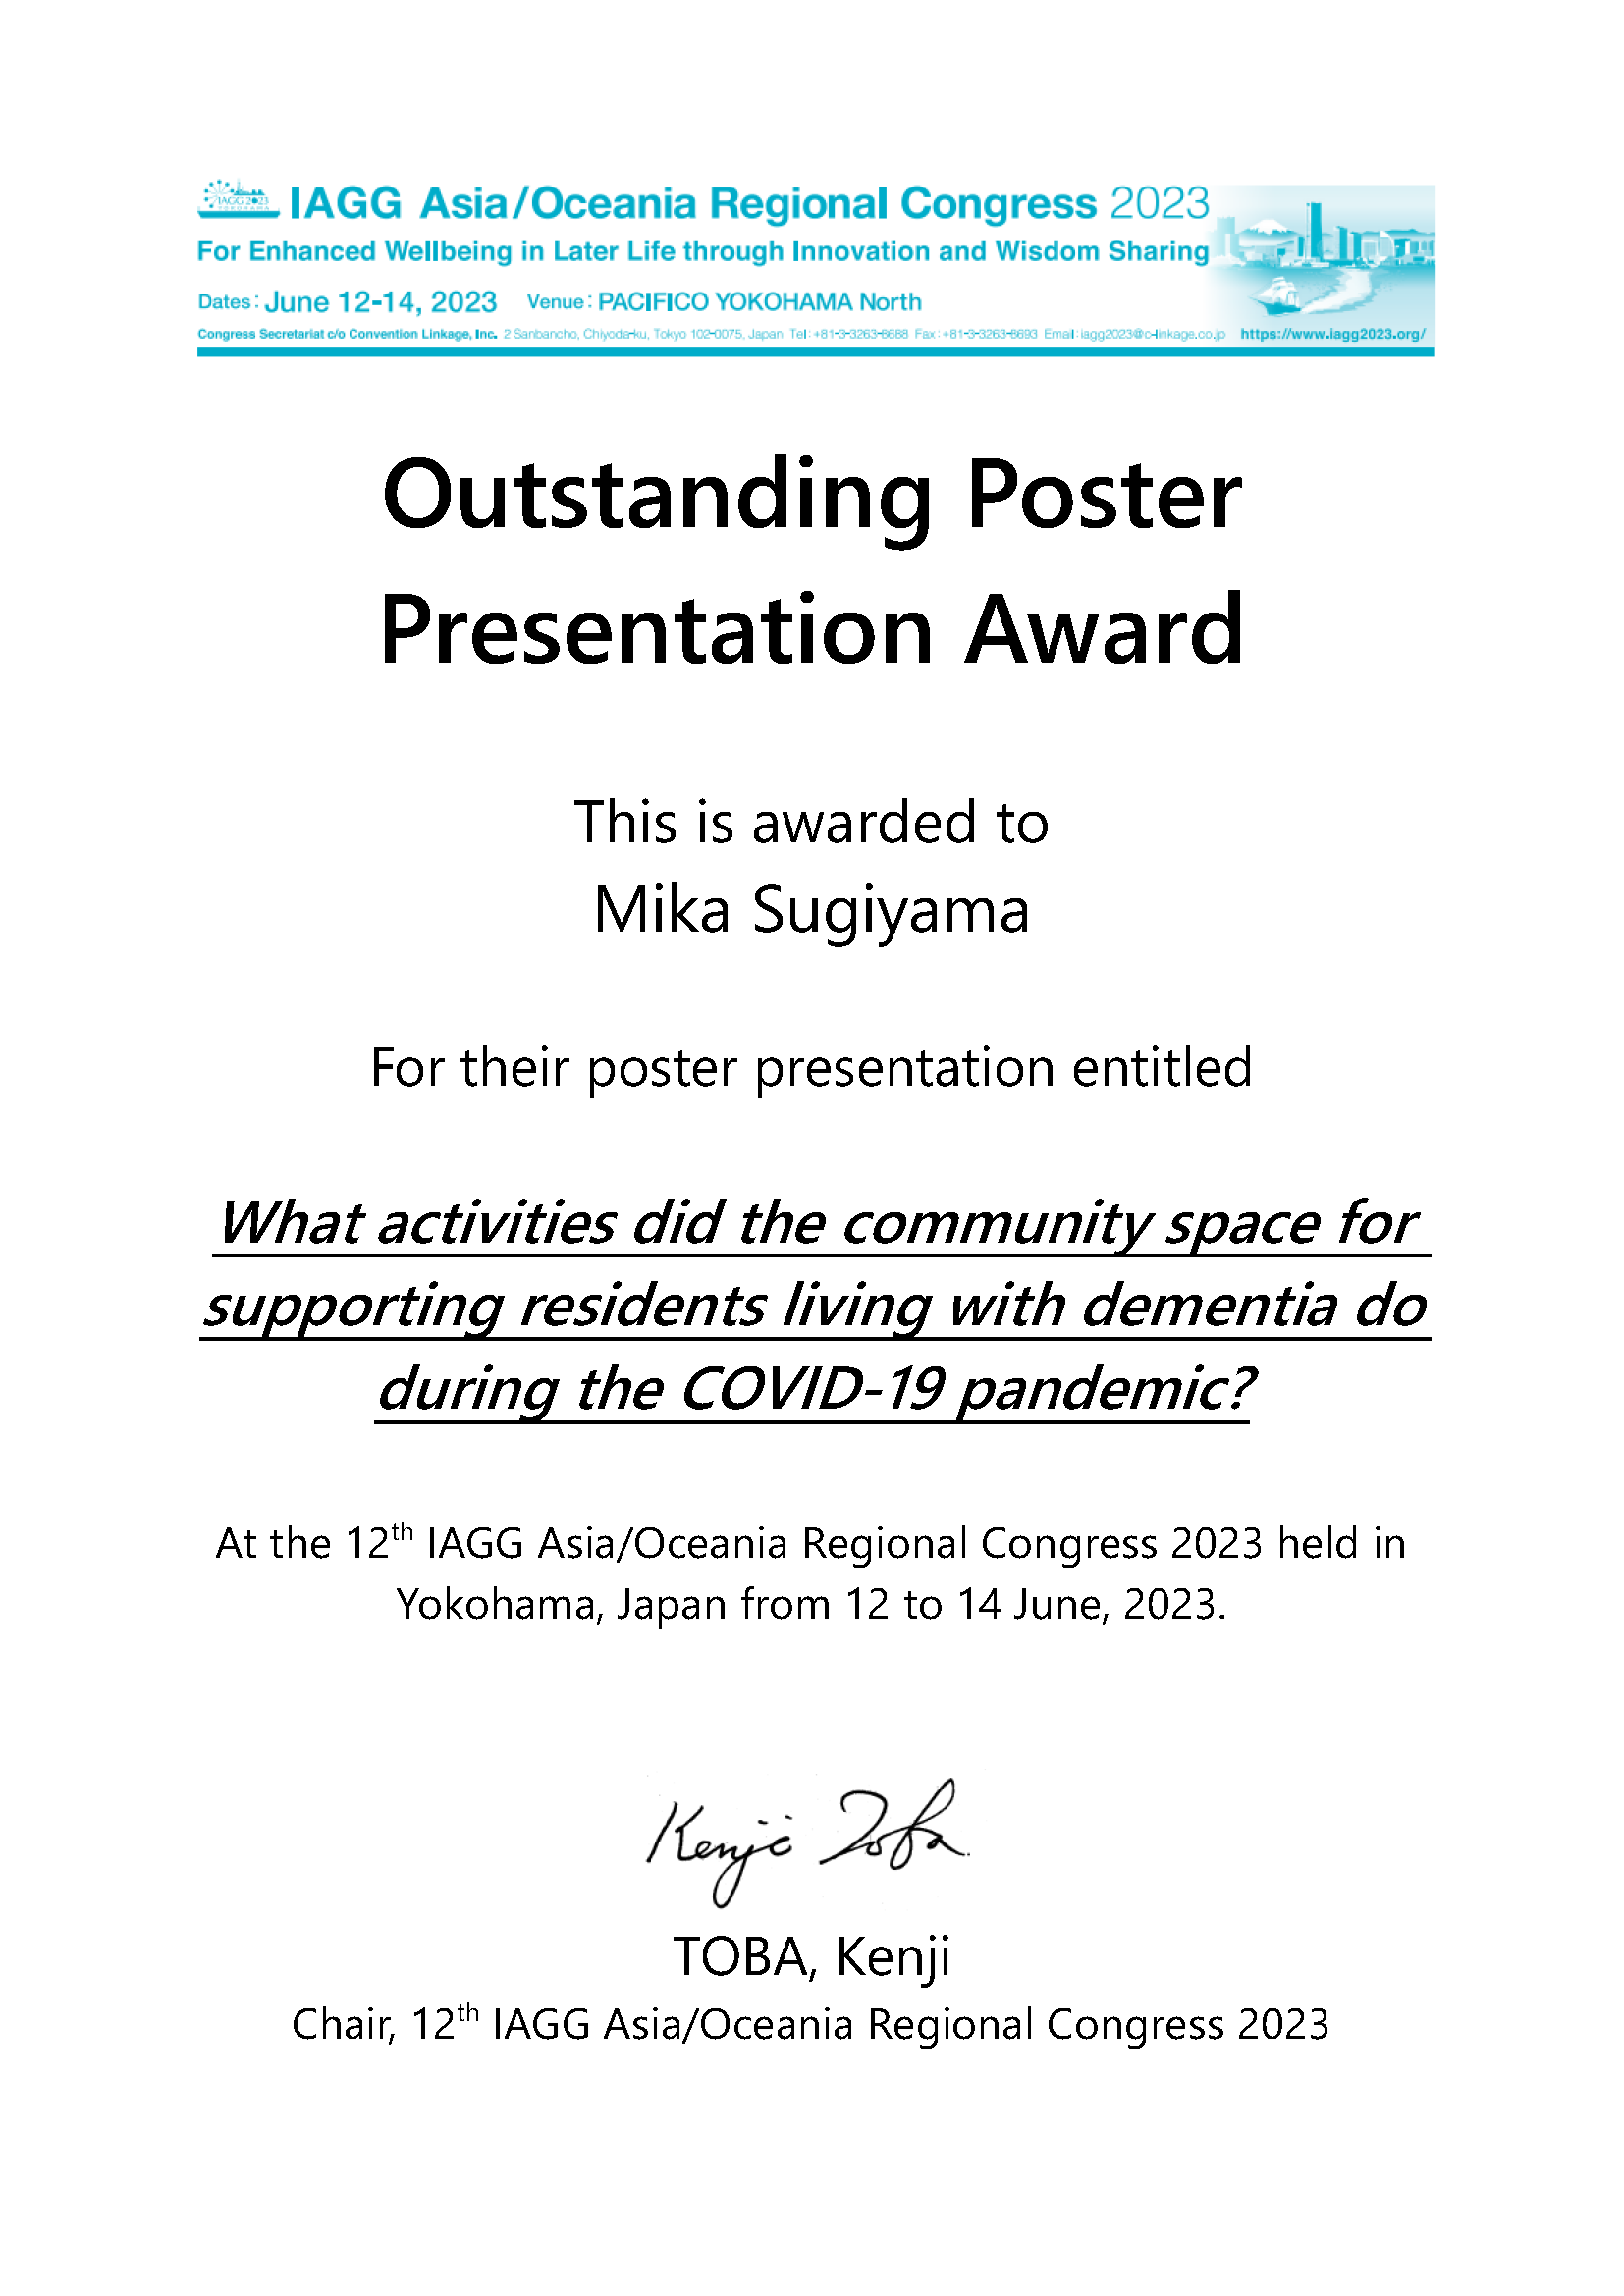 Outstanding Poster Presentation Award_94_Mika Sugiyama.png